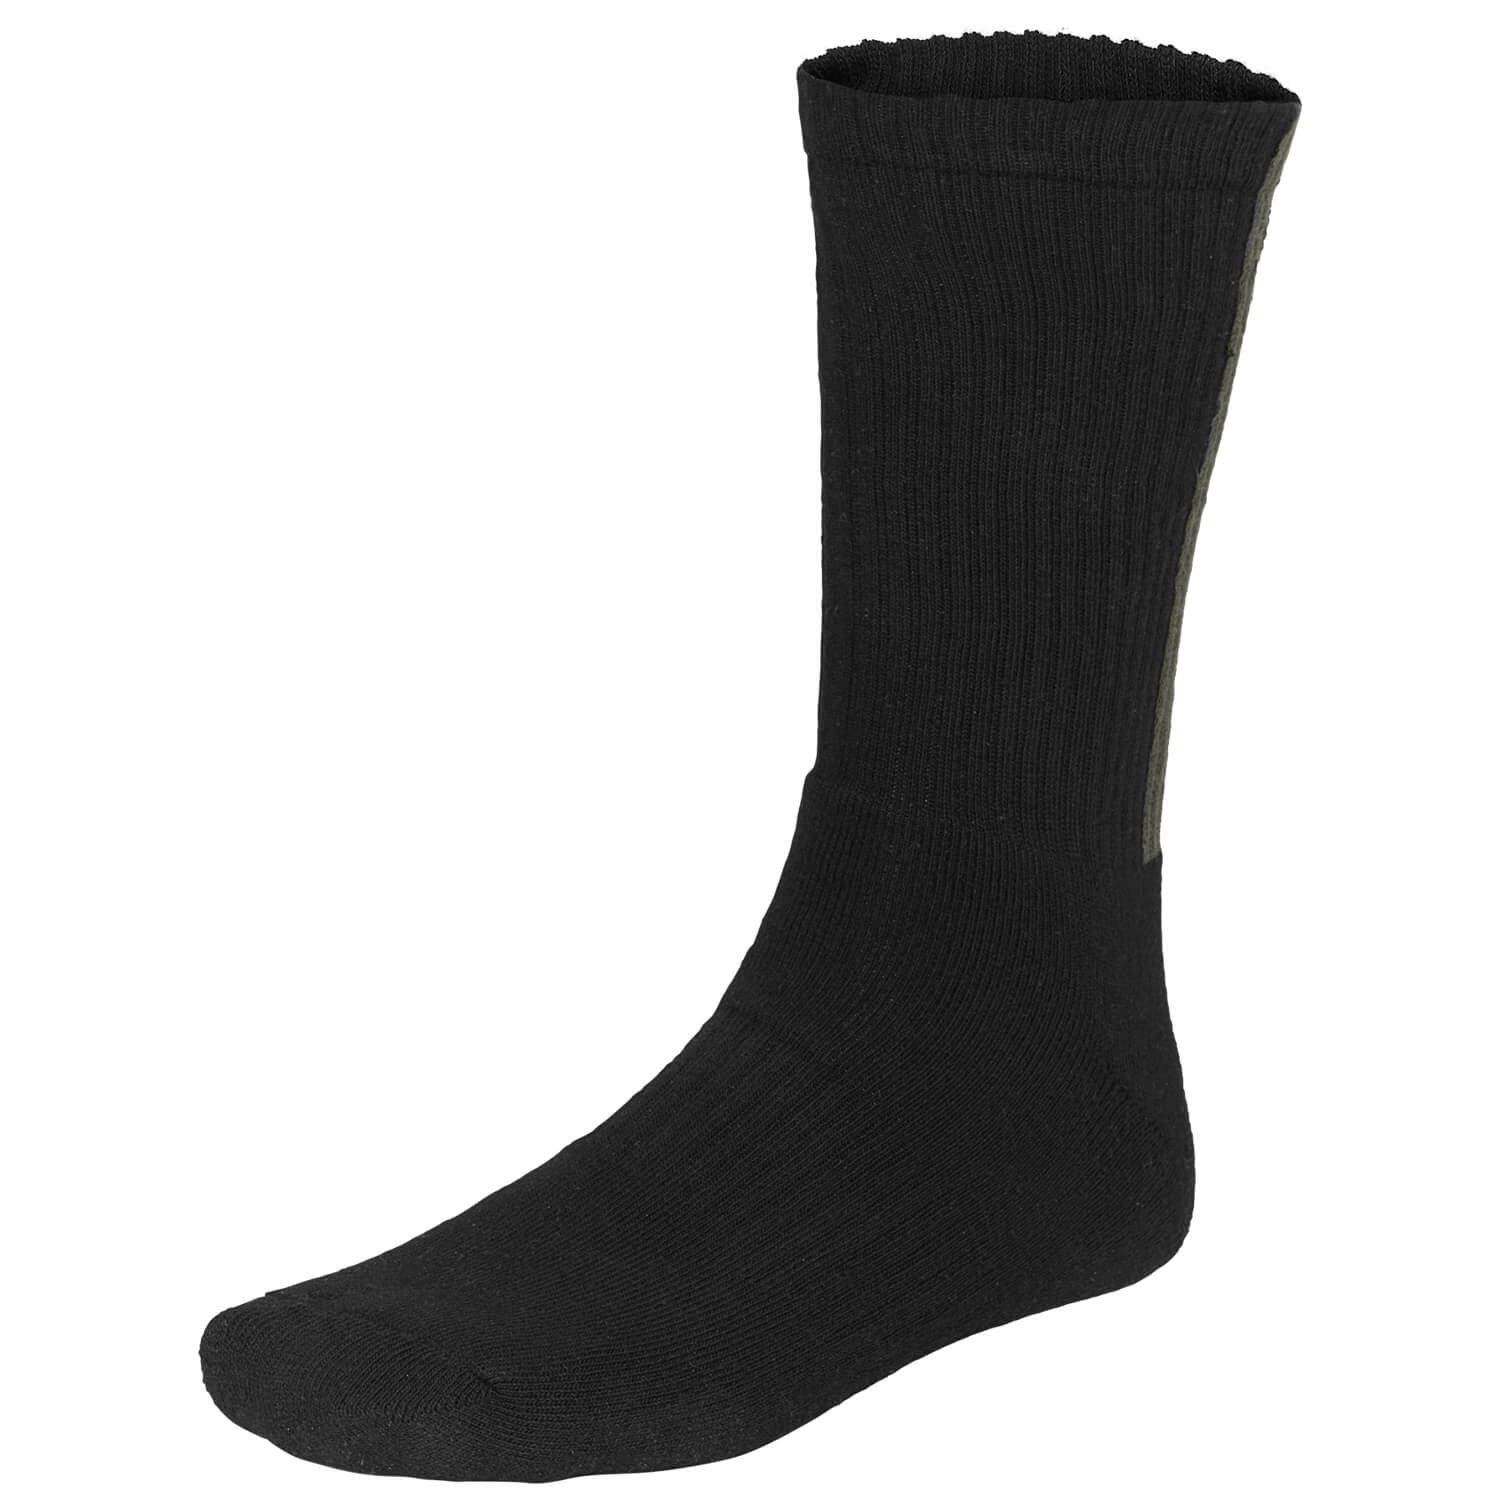 Seeland socks 3pcs Moor